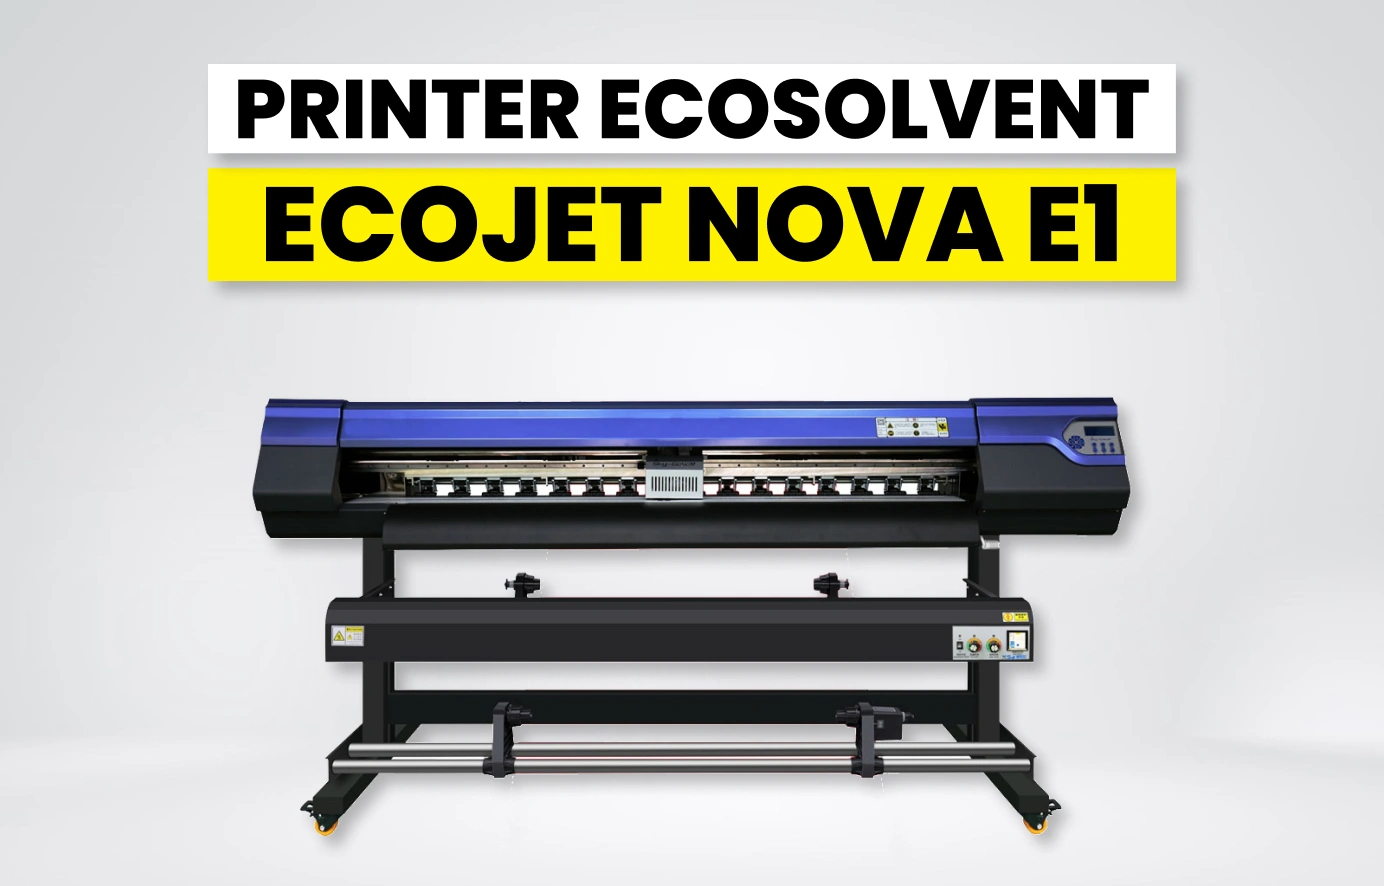 Printer Ecosolvent Ecojet Nova E1